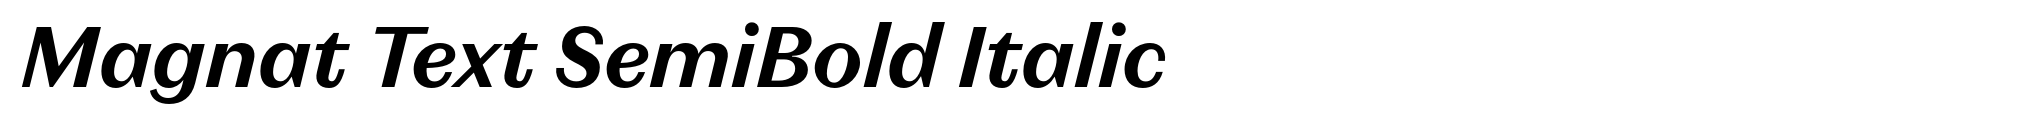 Magnat Text SemiBold Italic image